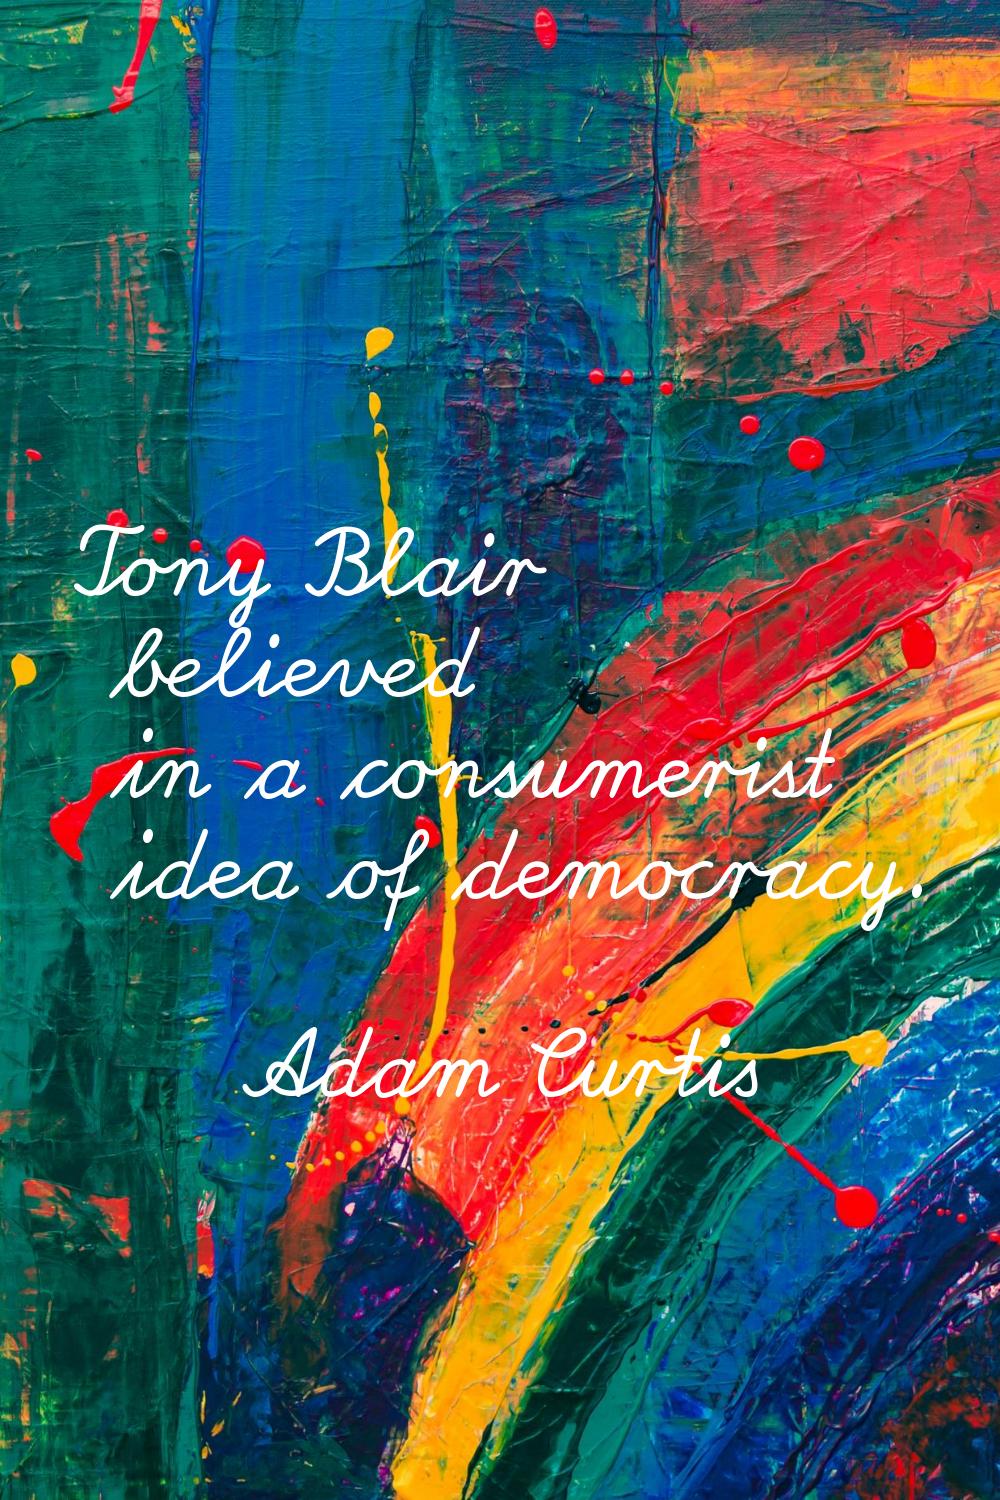 Tony Blair believed in a consumerist idea of democracy.